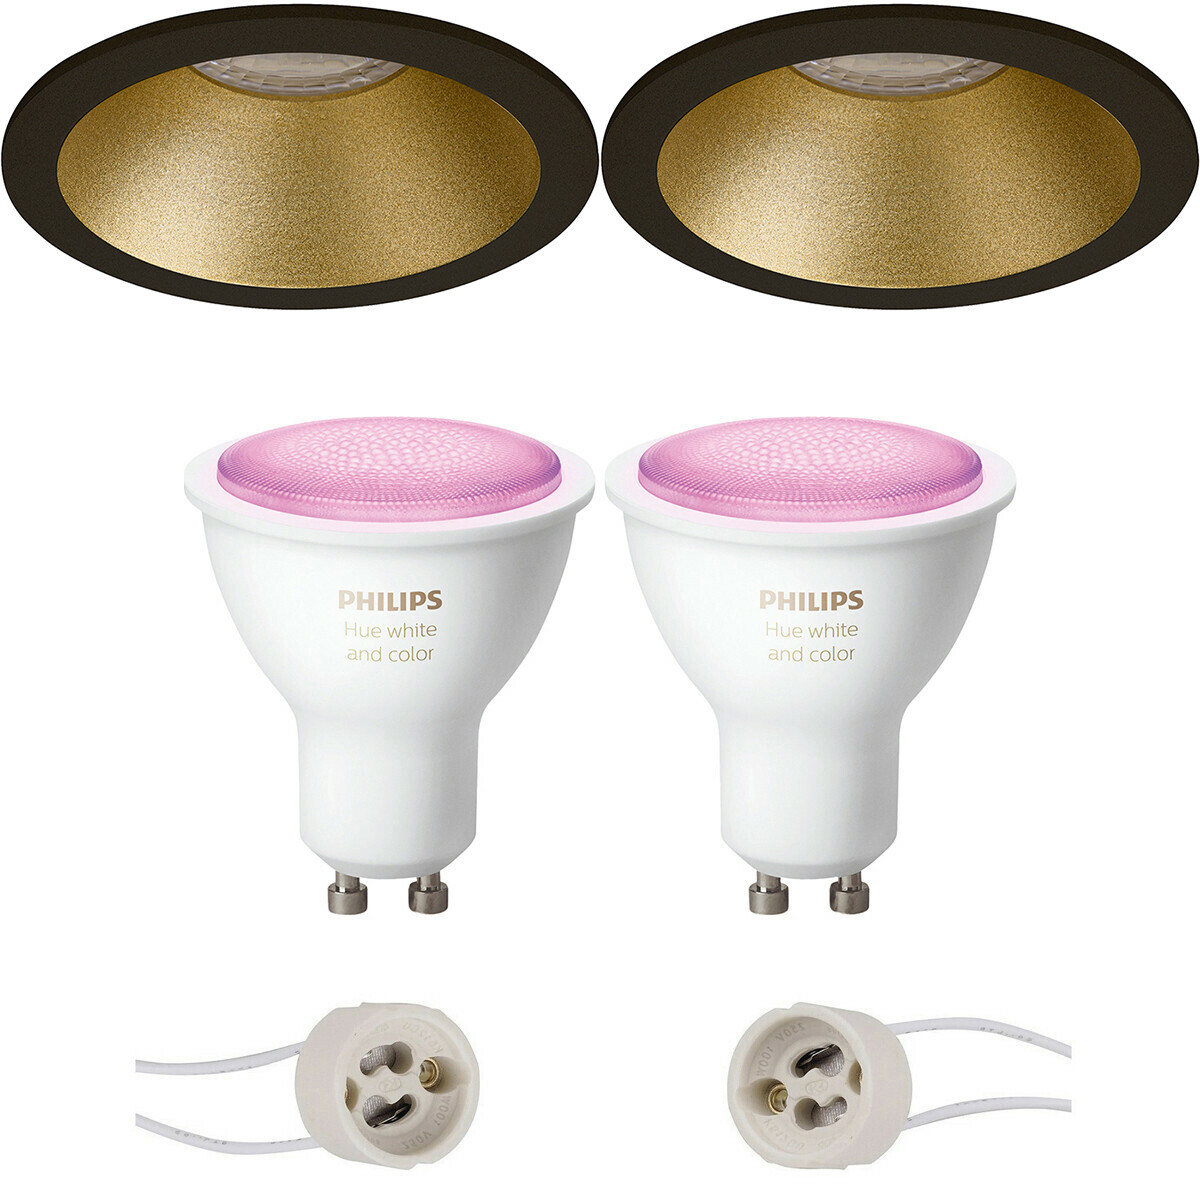 Pragmi Pollon Pro - Inbouw Rond - Mat Zwart/Goud - Verdiept - Ø82mm - Philips Hue - LED Spot Set GU10 - White and Color Ambiance - Bluetooth